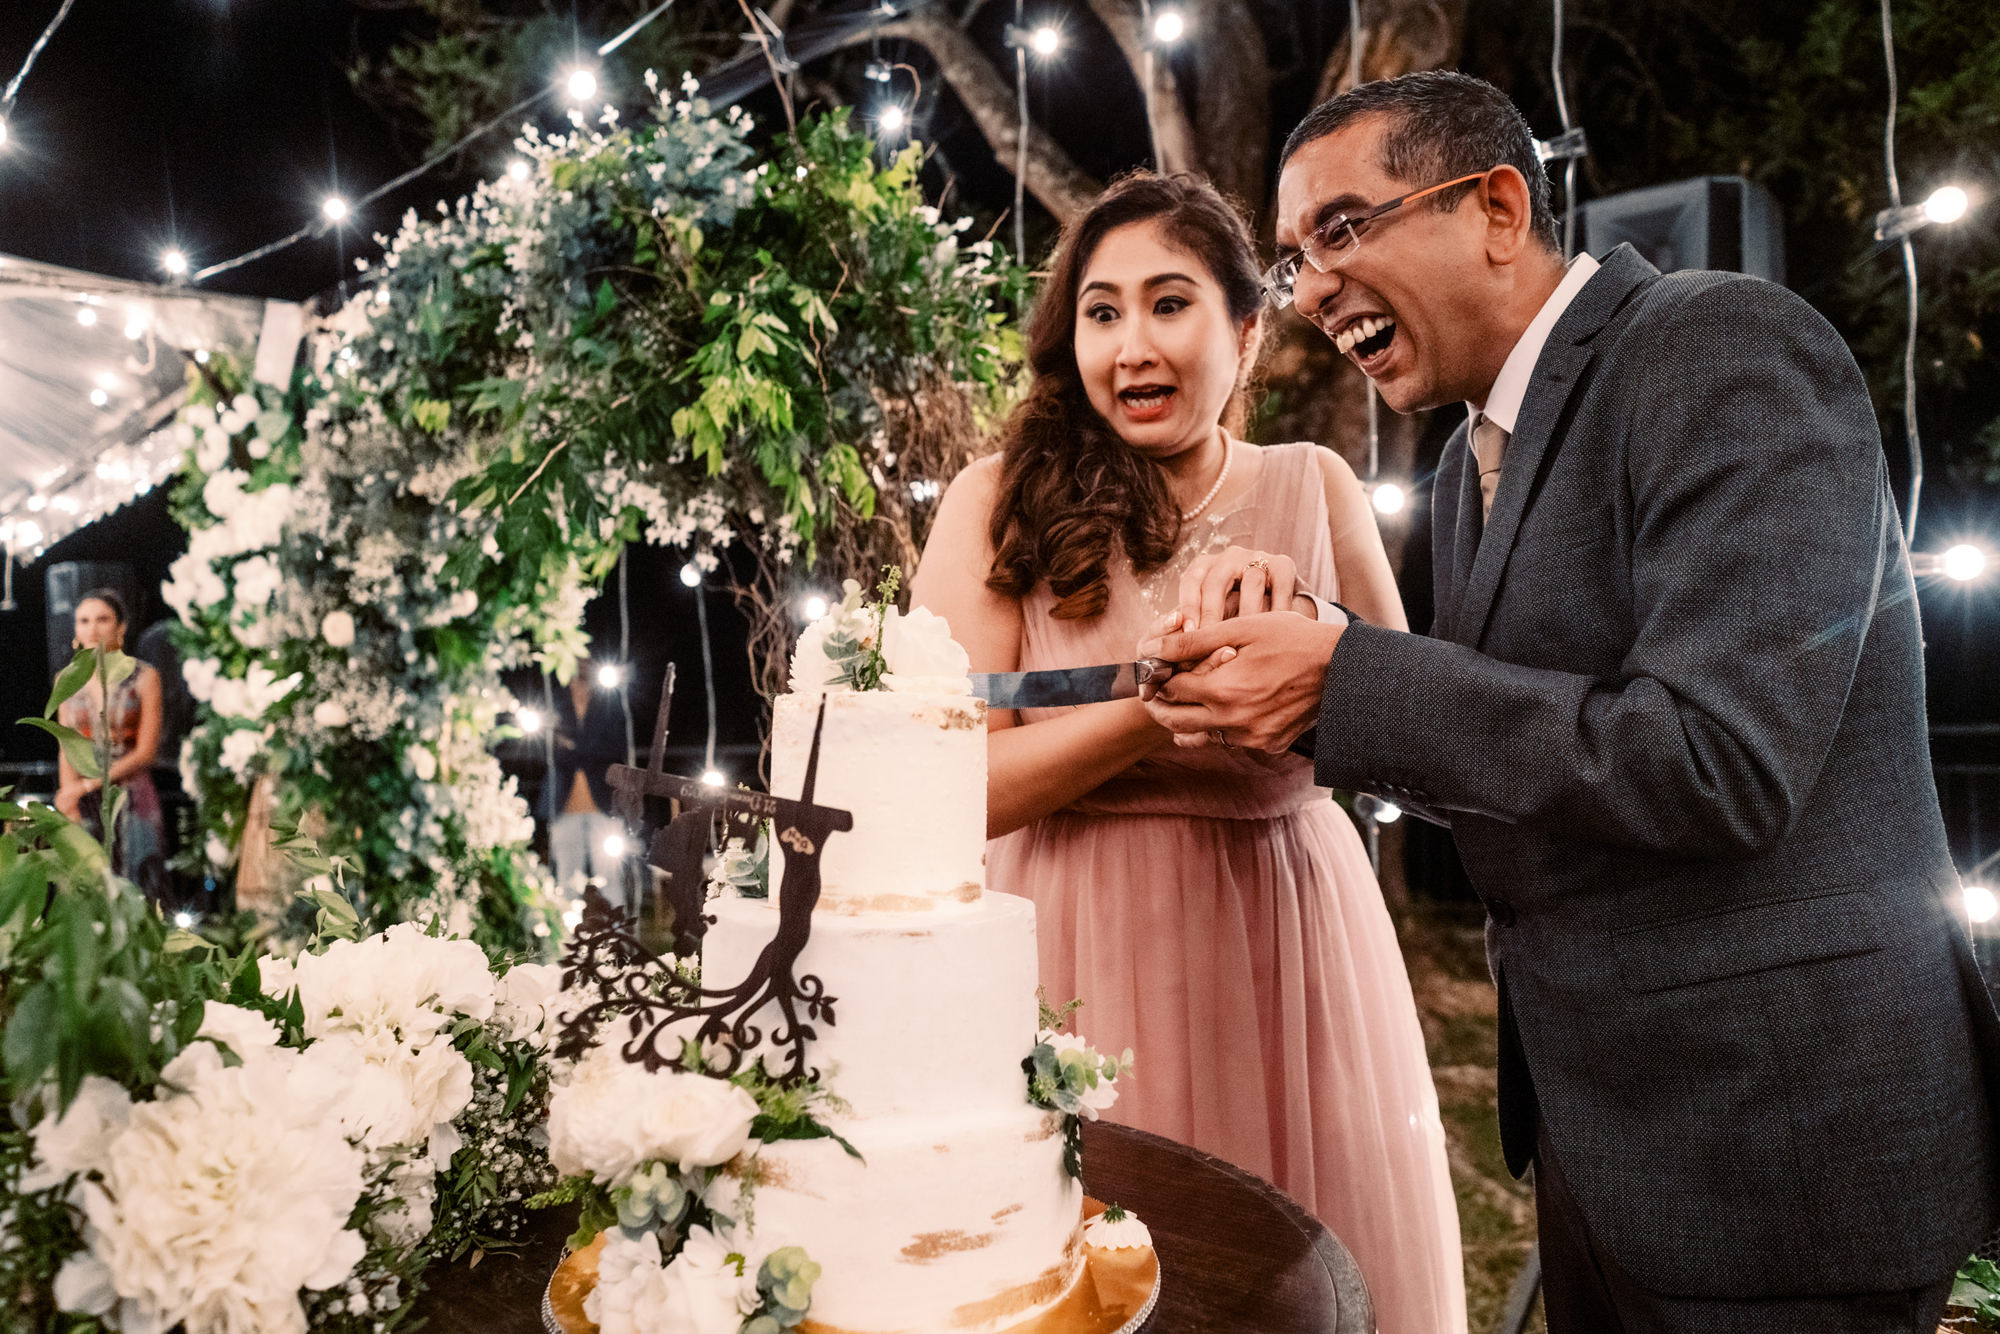 Nadira and Dhillon cut their wedding cake.